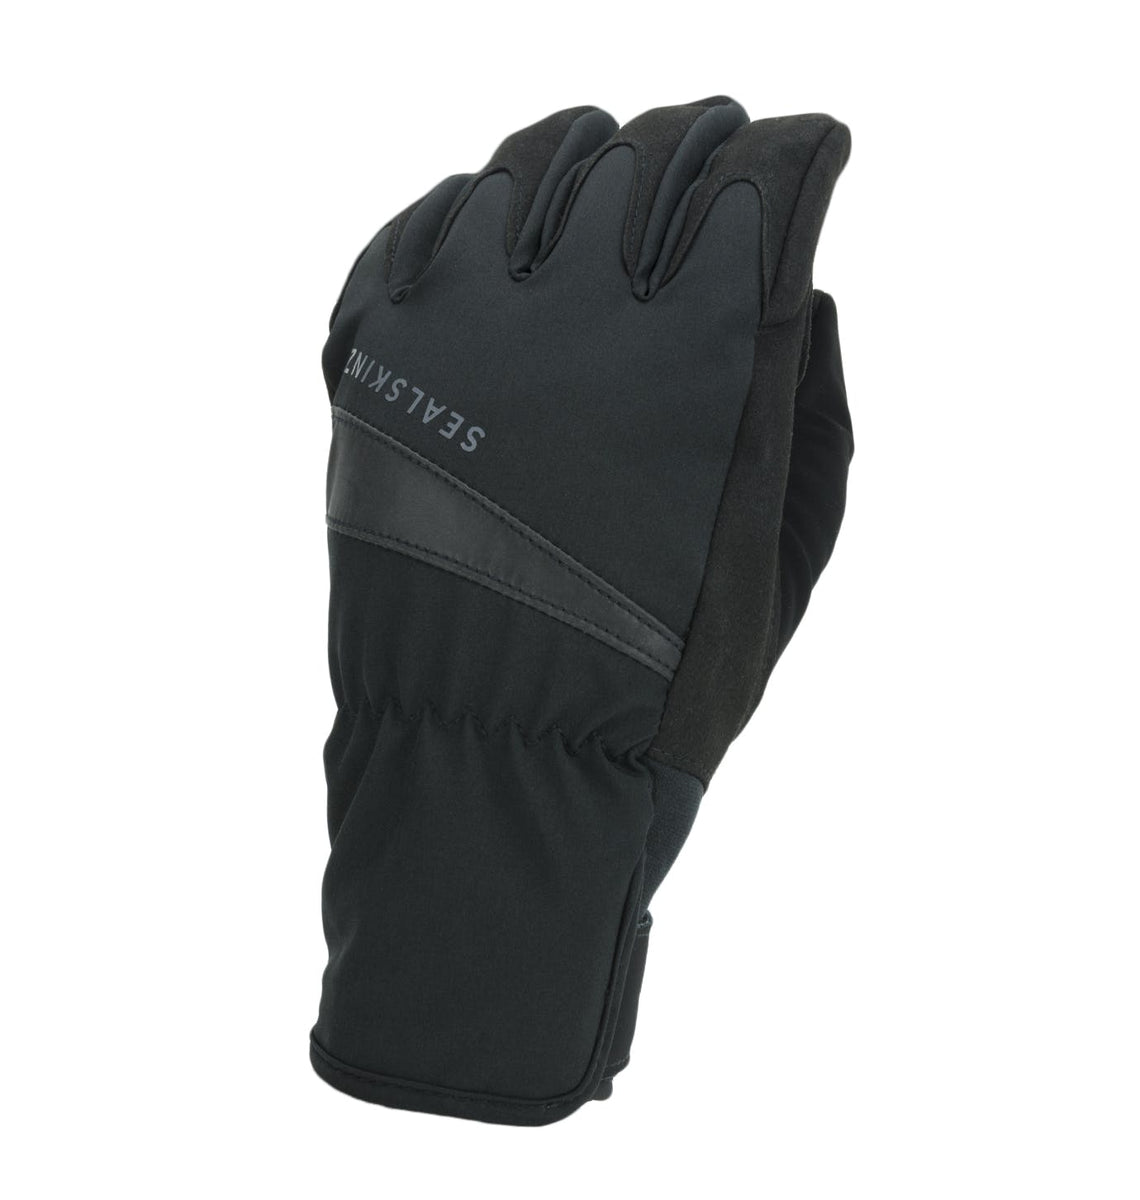 Bodham - Women's Waterproof All Weather Cycle Glove